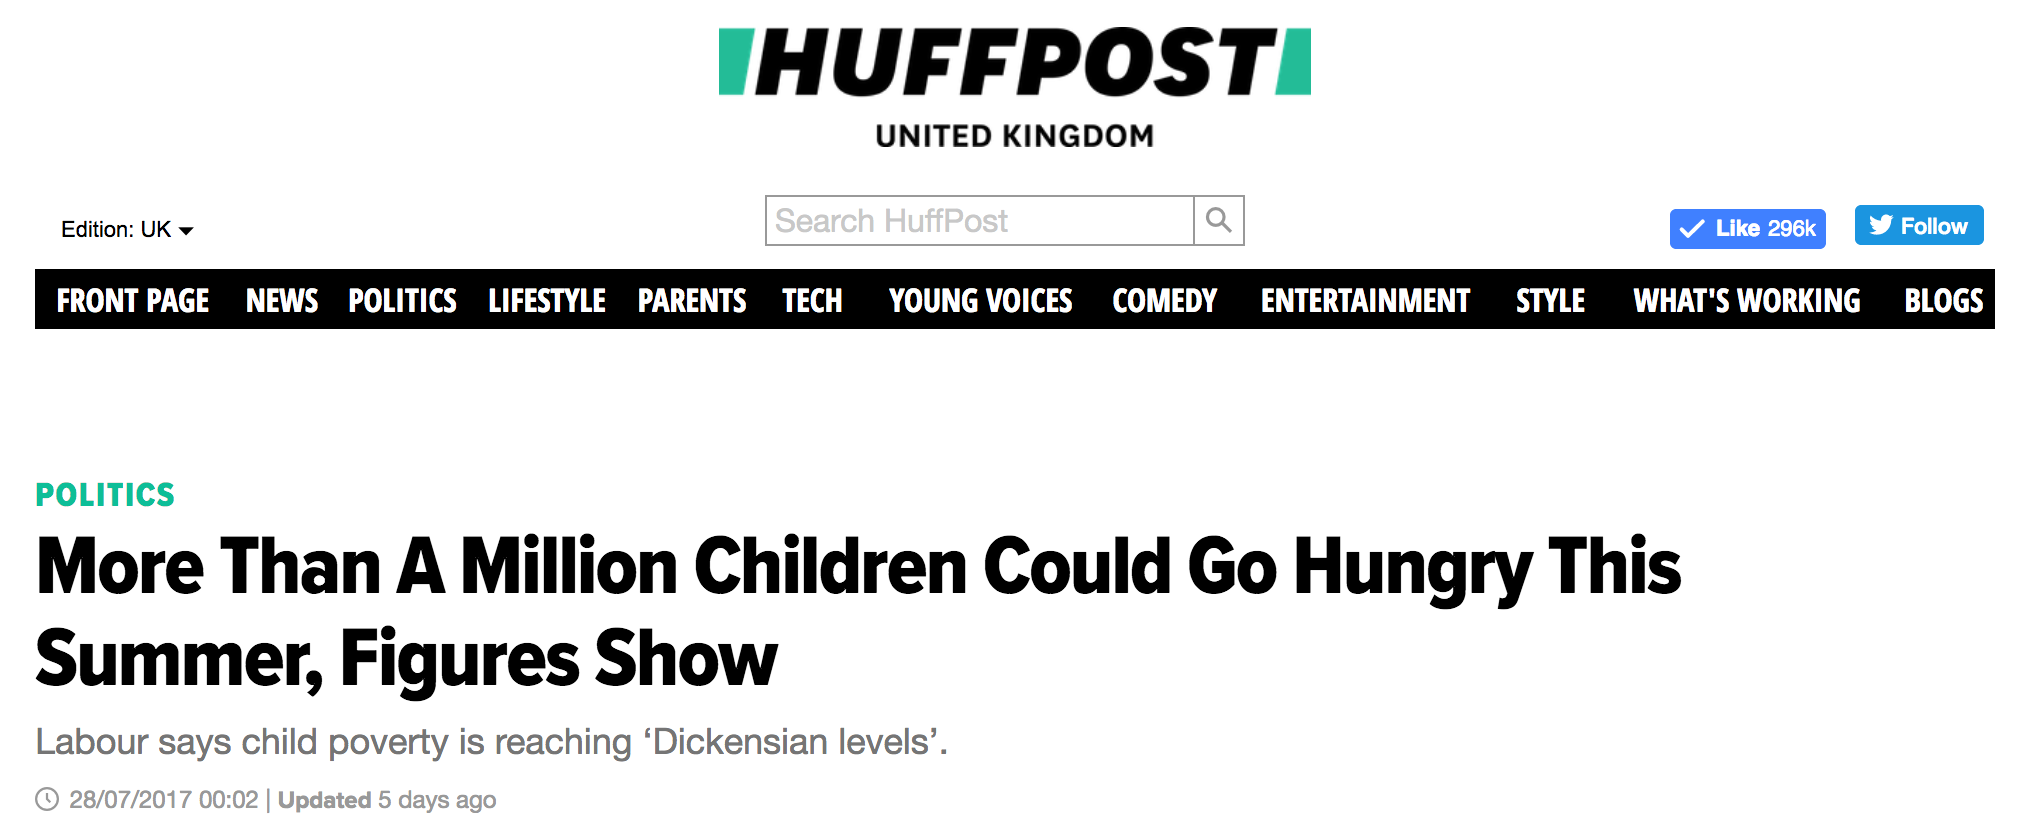 Huff Post Million Children Go Hungry